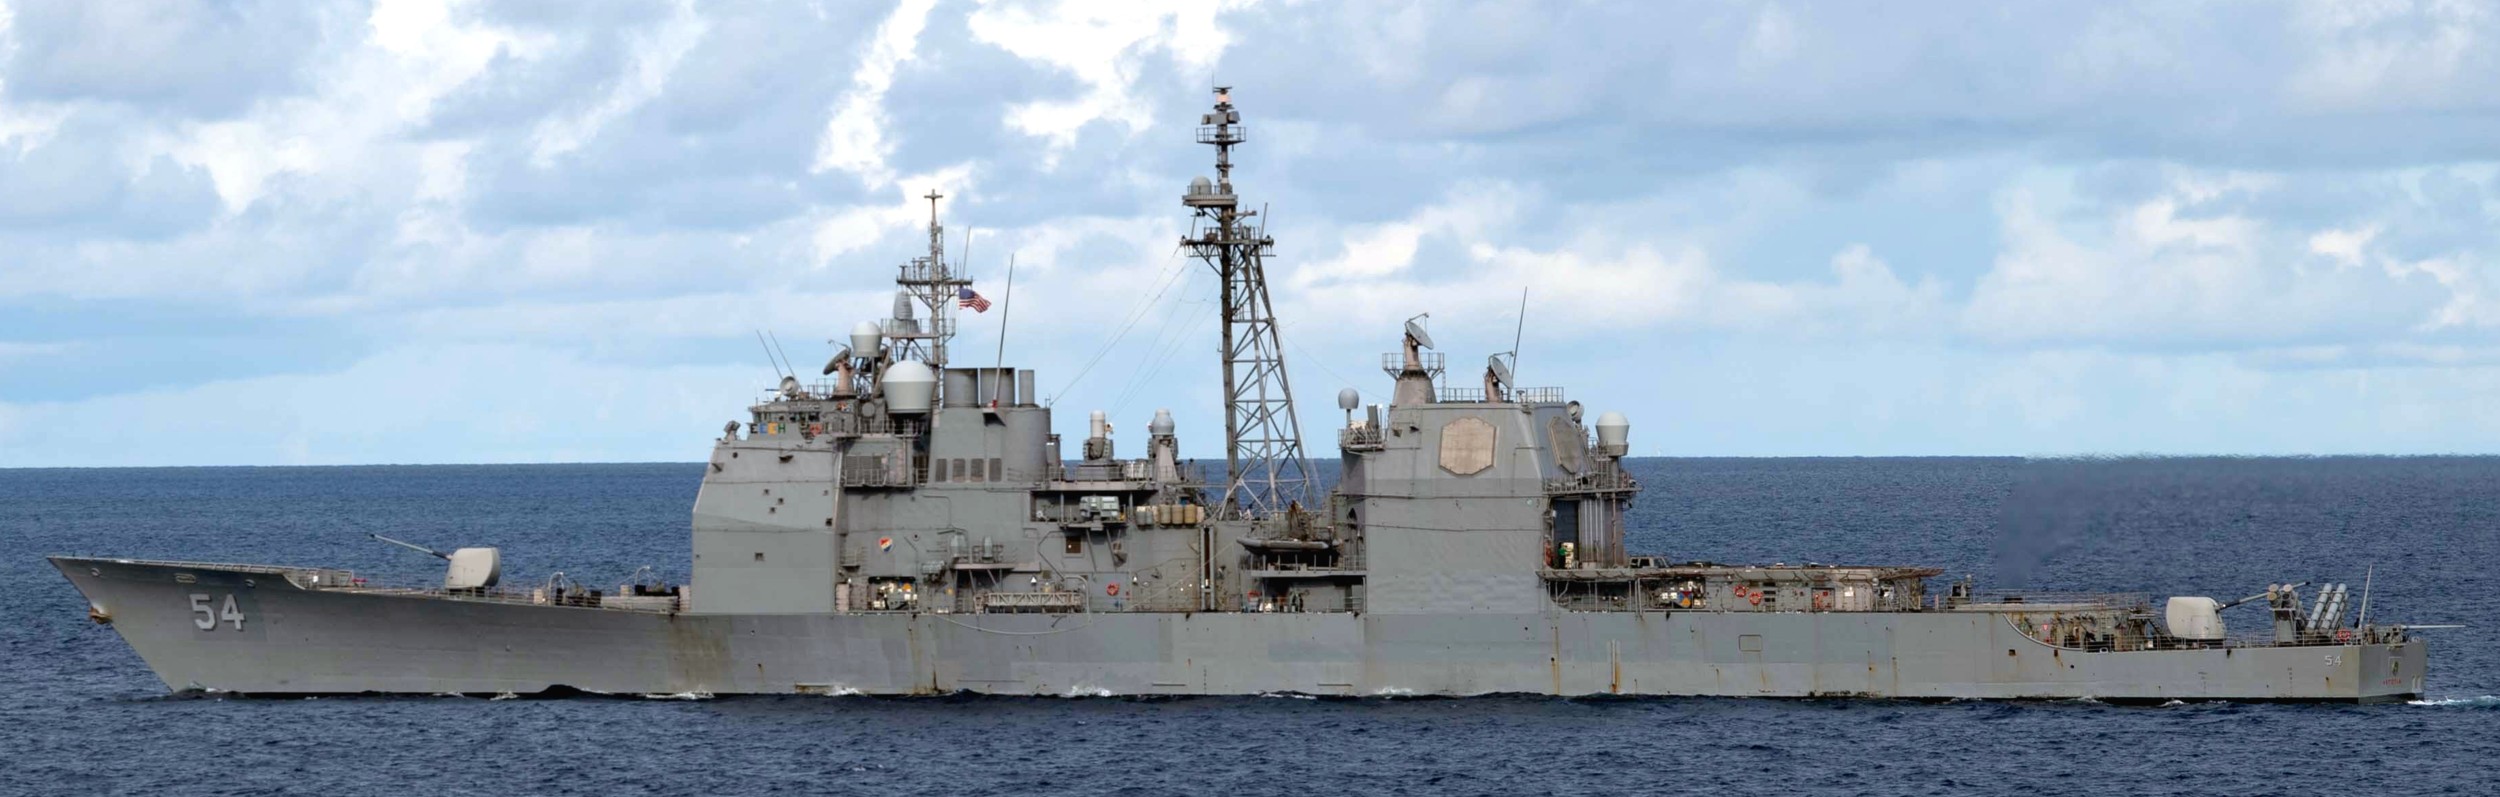 cg-54 uss antietam ticonderoga class guided missile cruiser aegis us navy 94